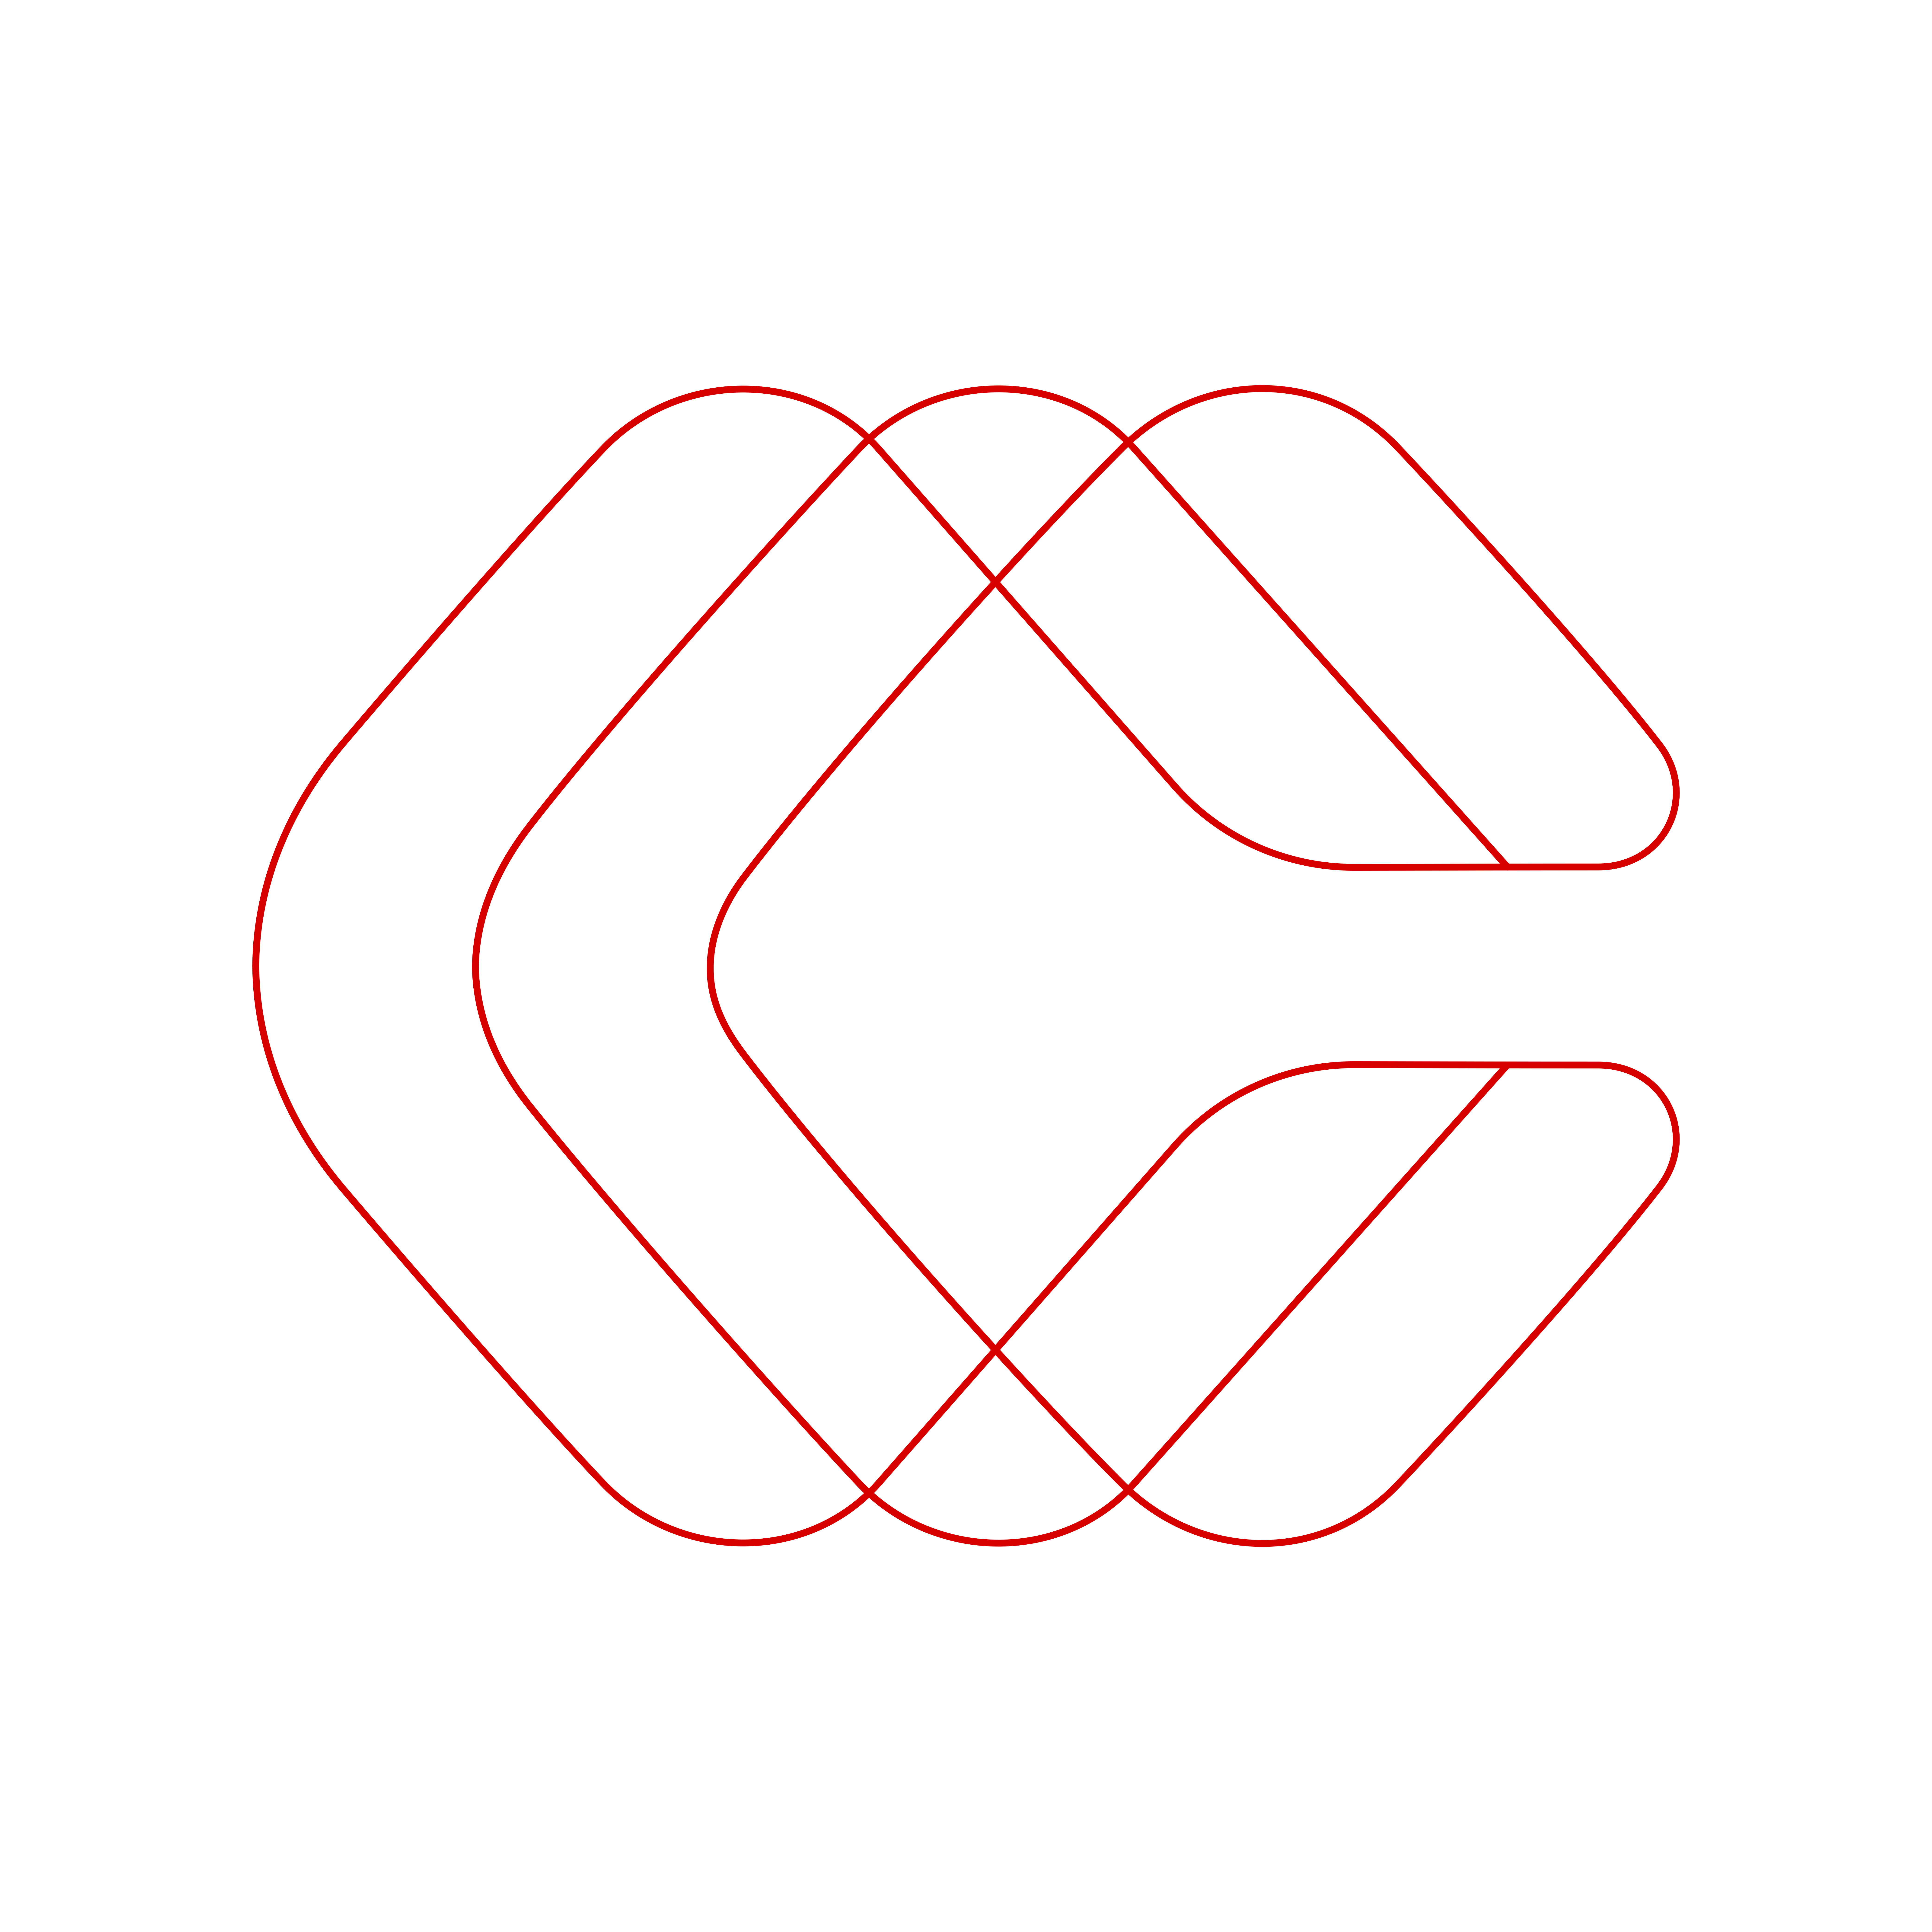 Centigen logo design by logo designer Pragmatika for your inspiration and for the worlds largest logo competition